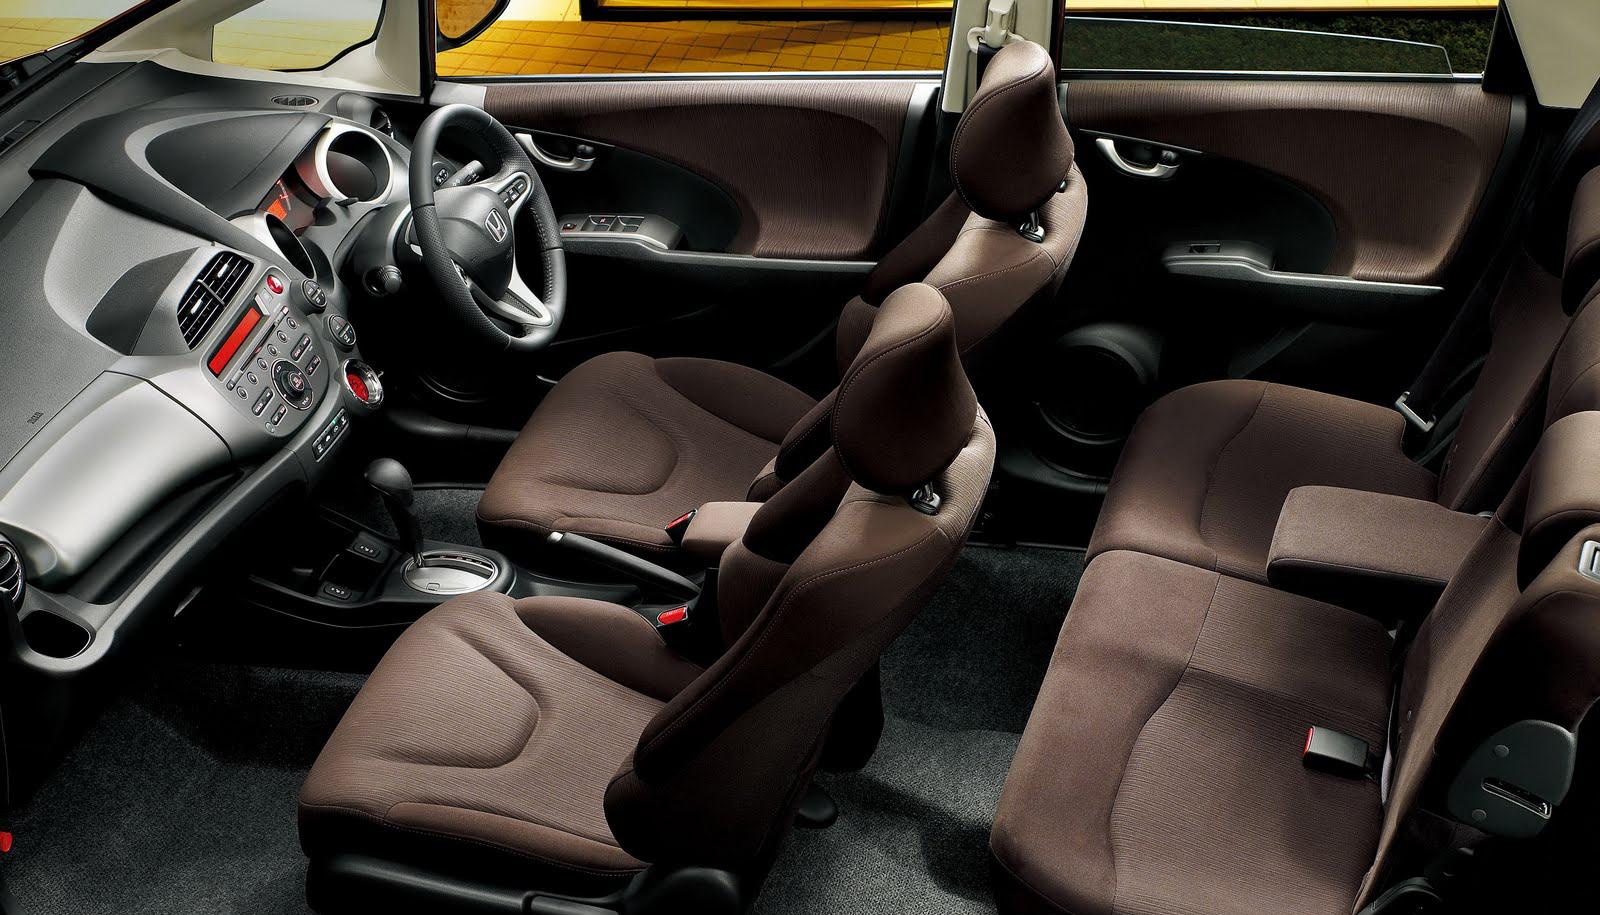 Modifikasi Interior Mobil Honda Jazz Modifikasi Style